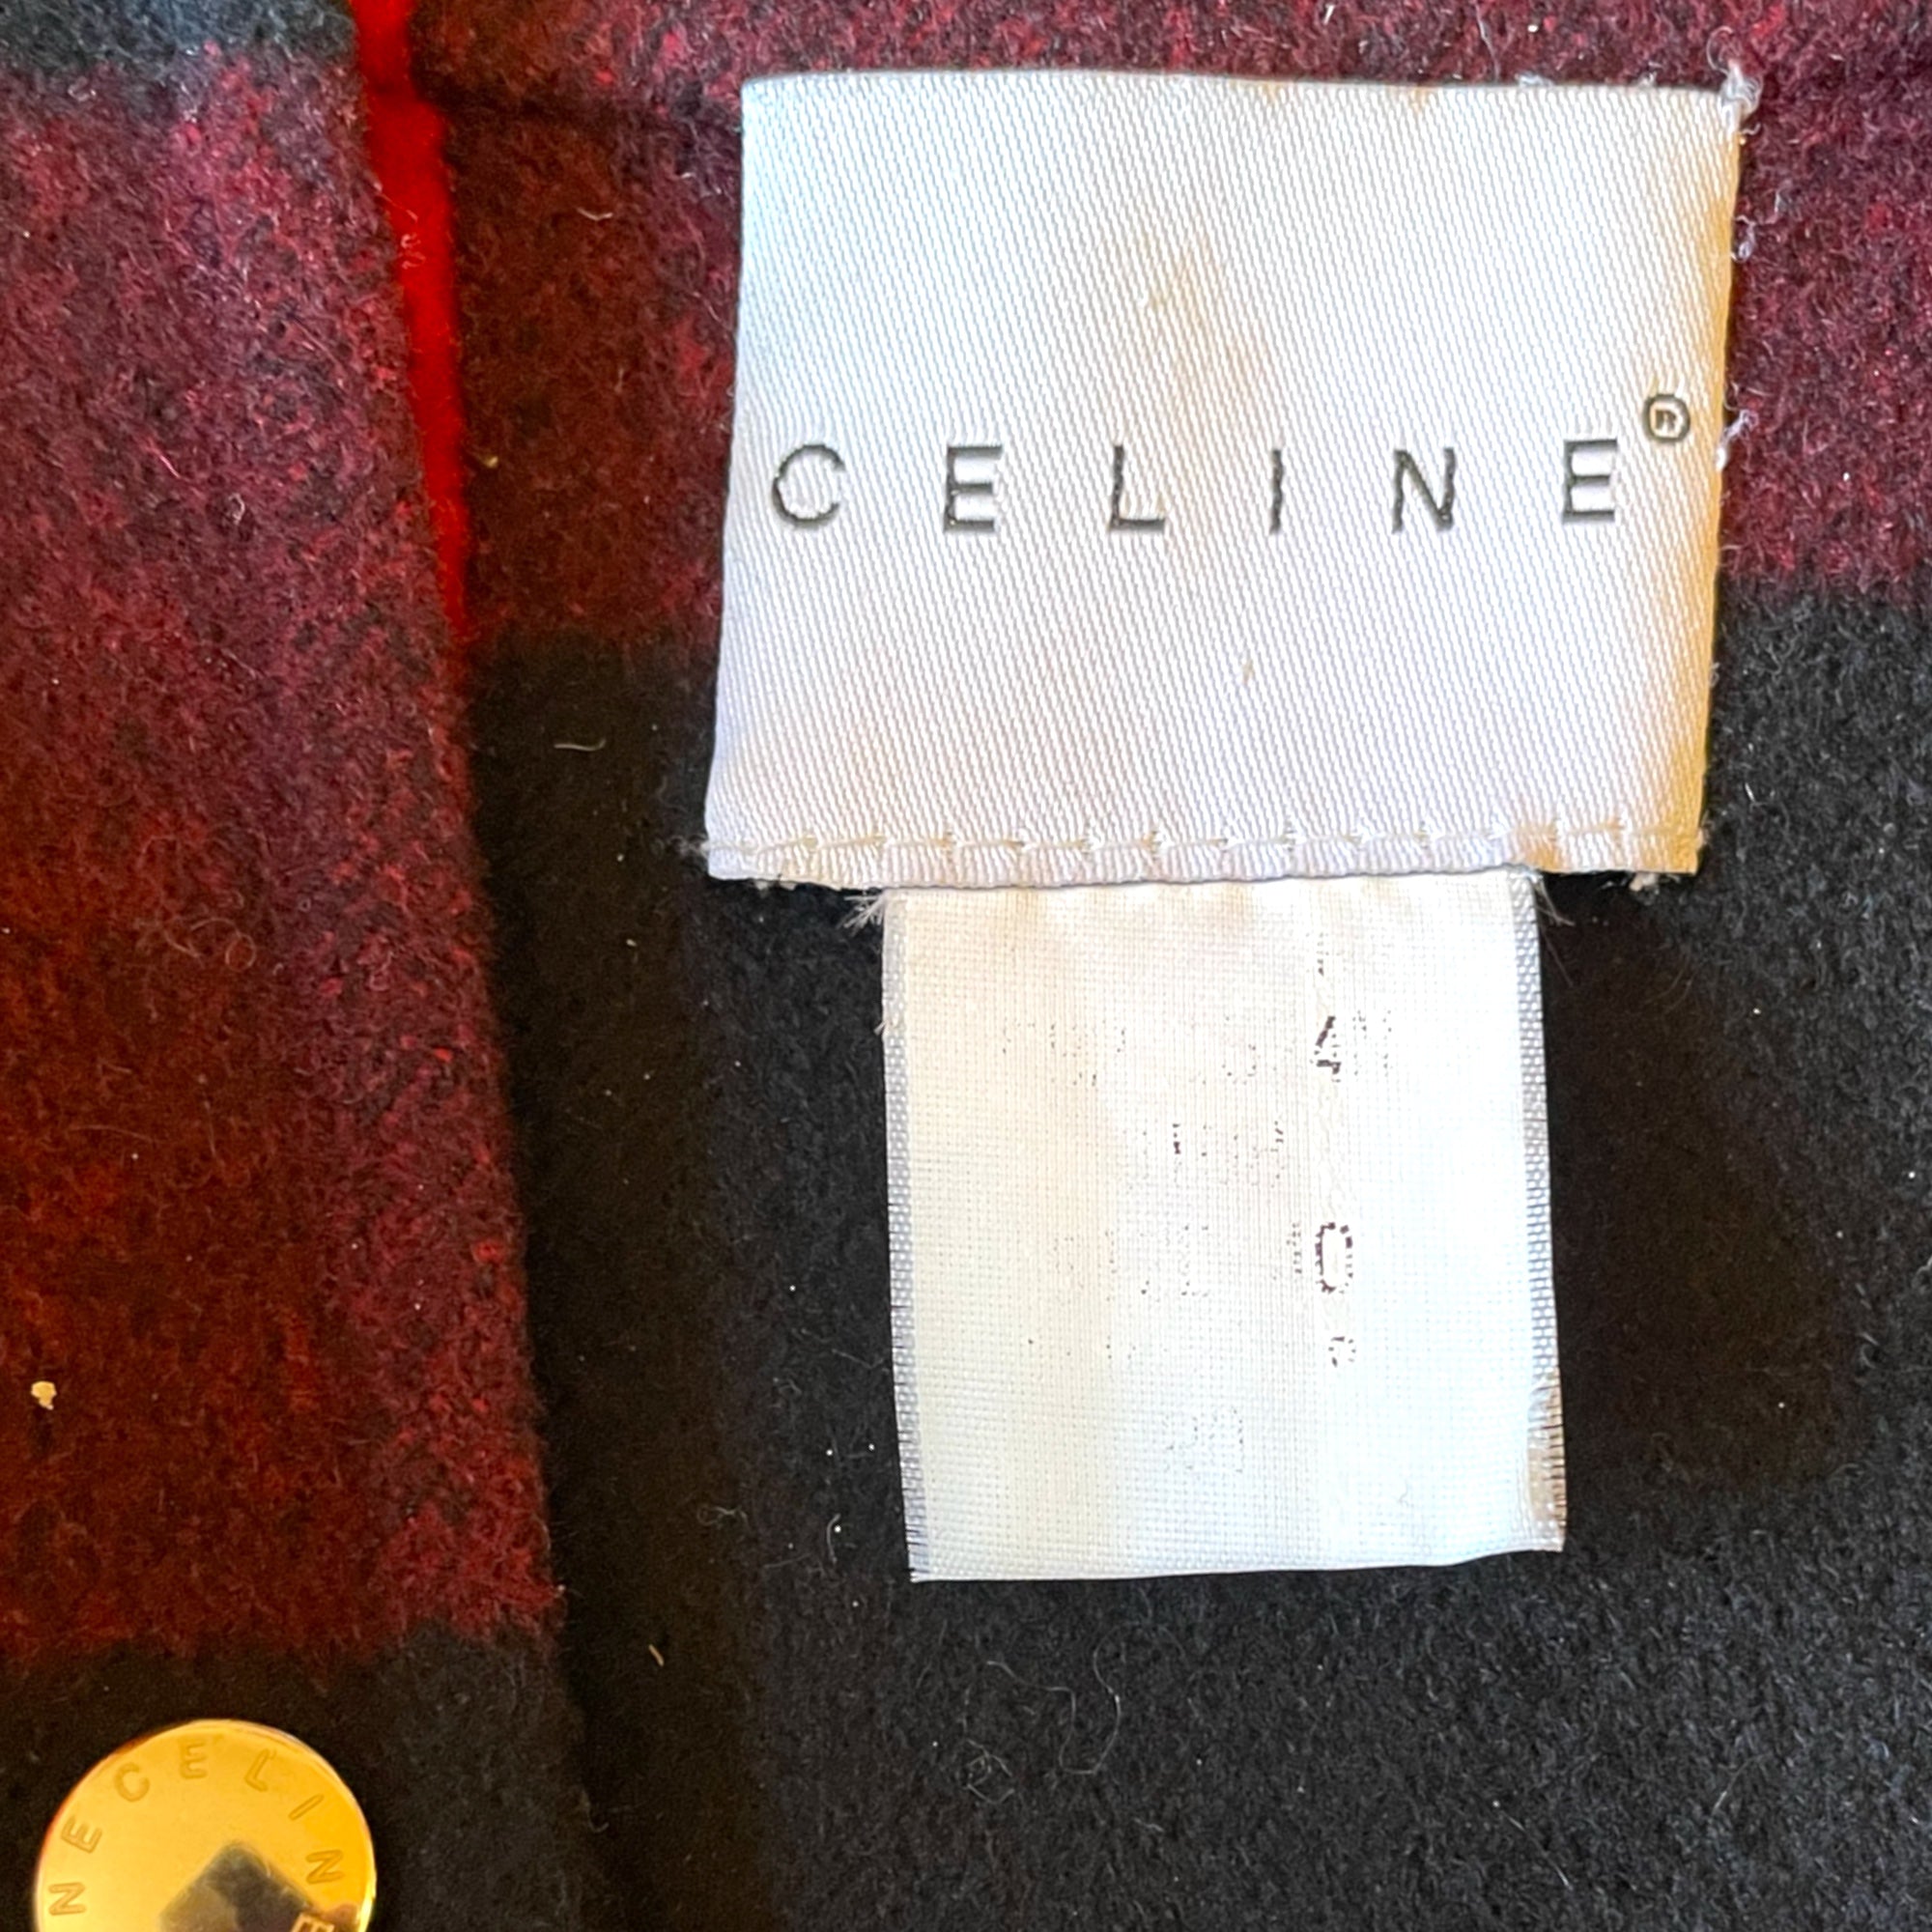 CELINE Wool/Cashmere Red & Black Plaid Jacket |Size: 40|